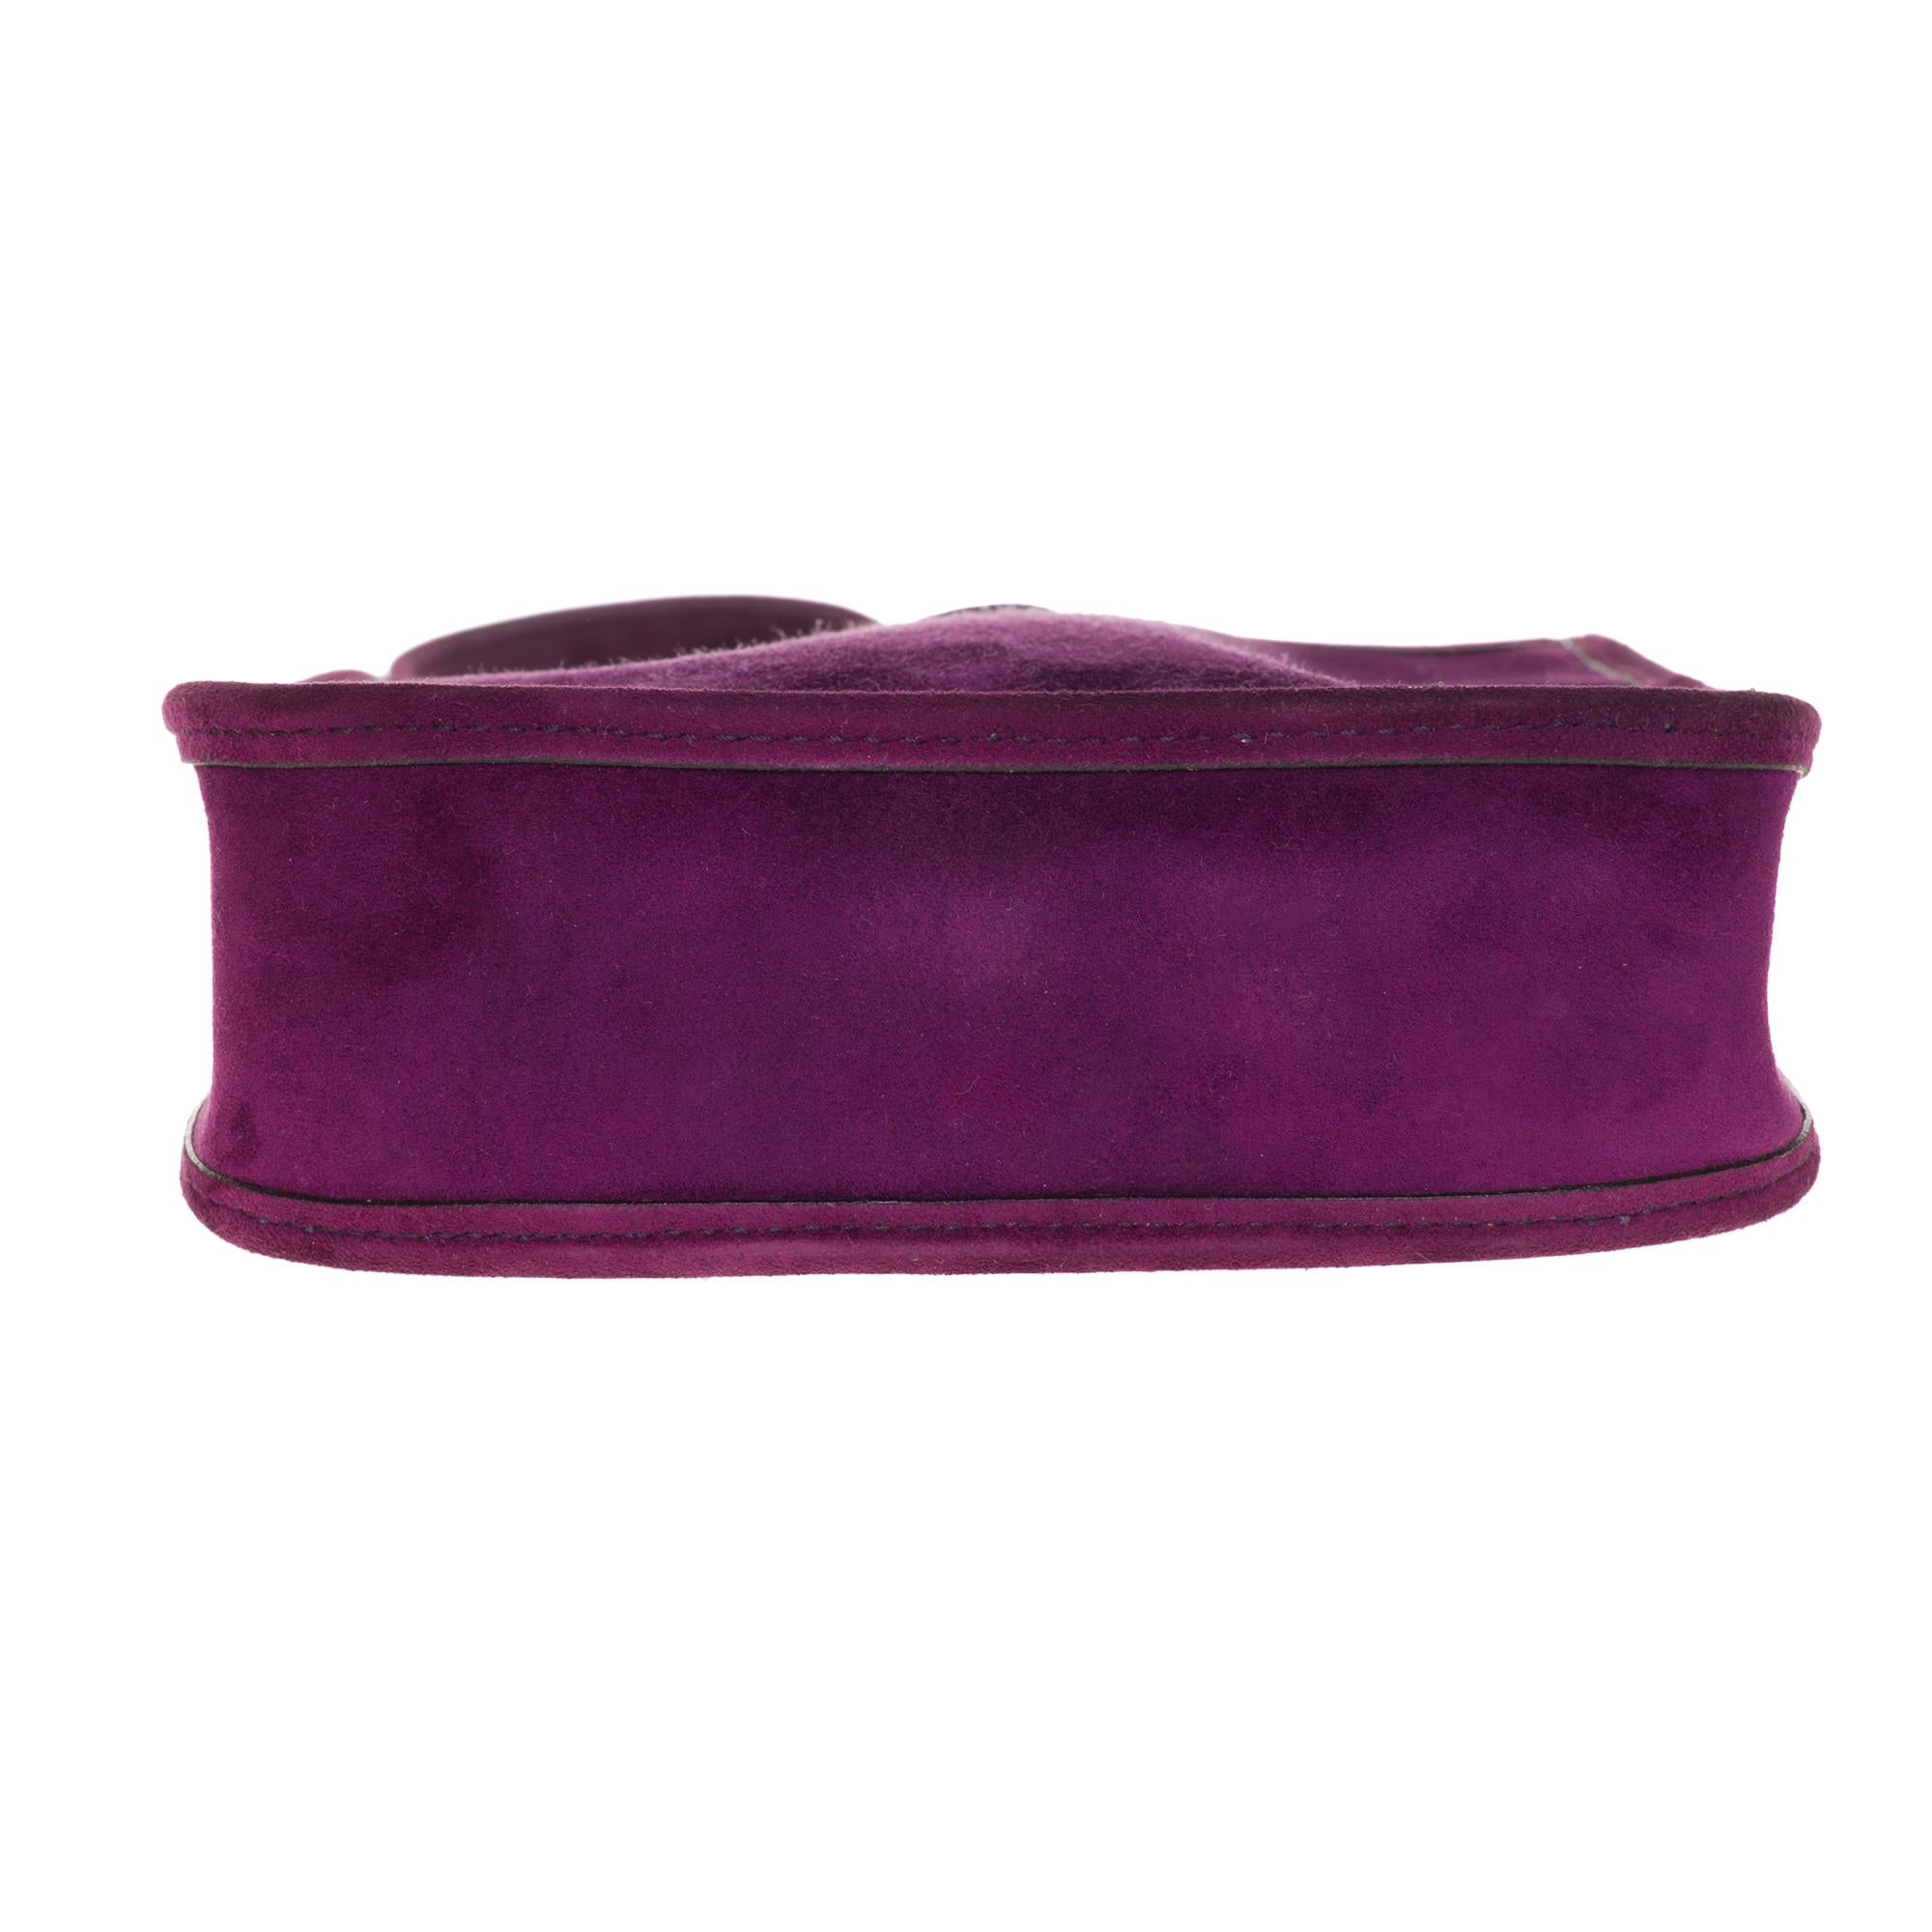 Rare Hermès Evelyne TPM handbag in purple suede, new condition ! 3